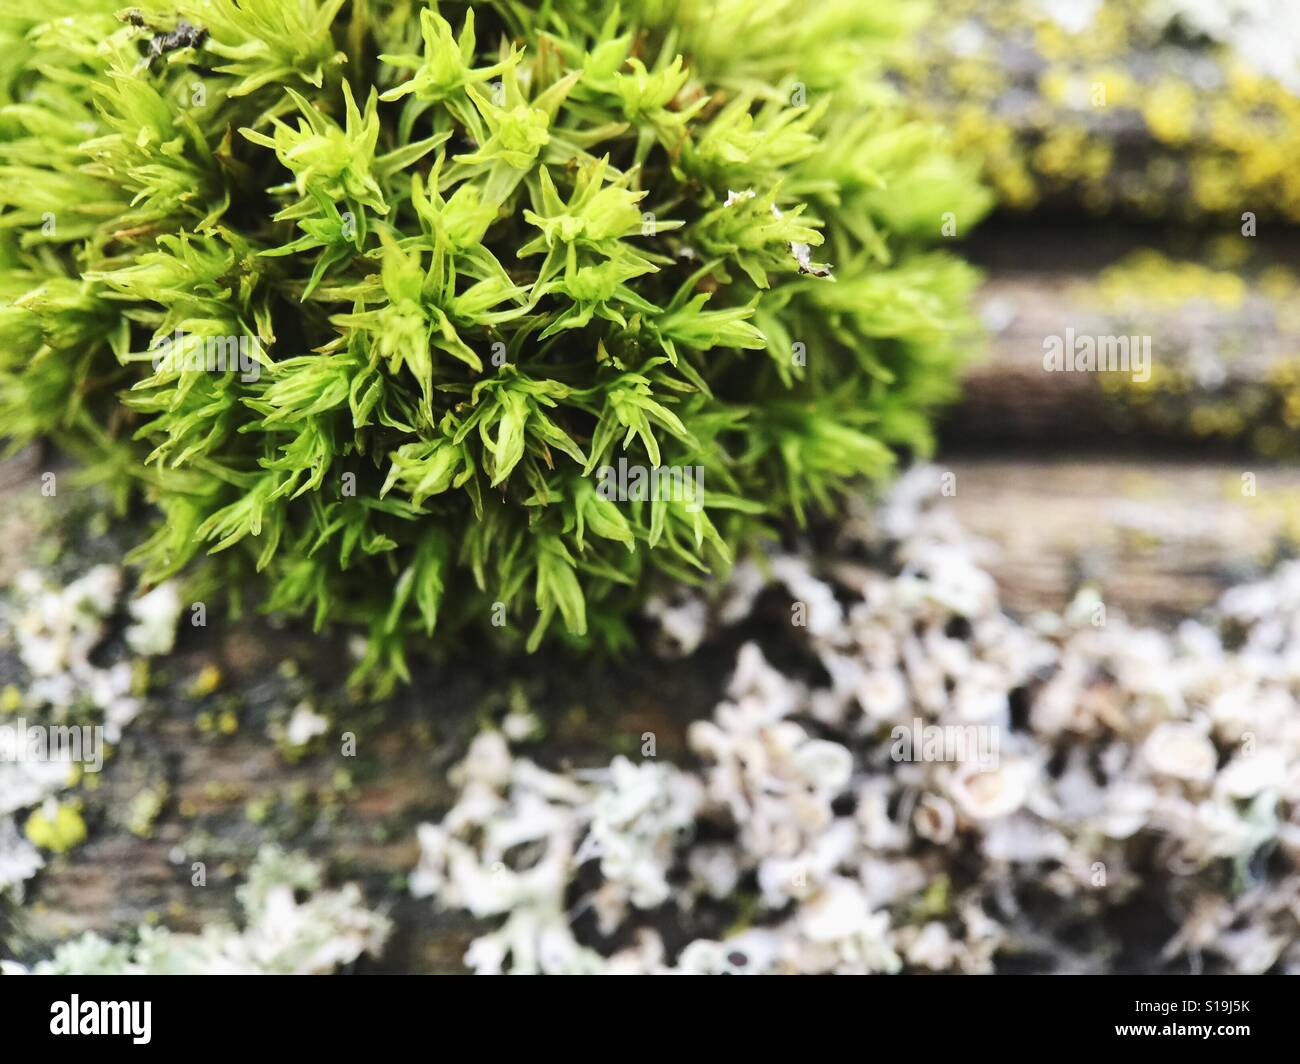 Close up shot of a fruticose and foliose lichen on a wooden board Stock Photo